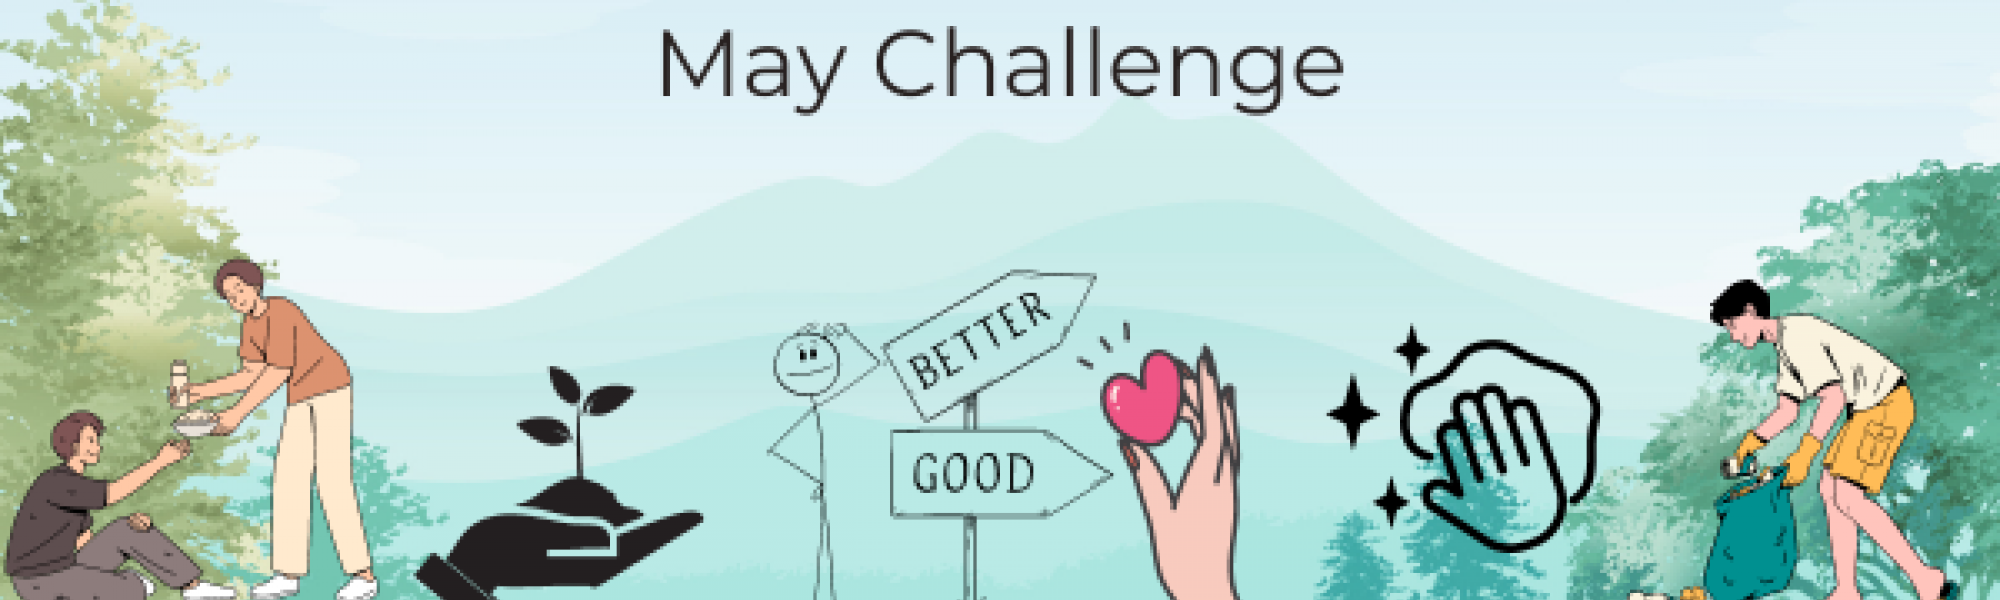 May Challenge - make it better and beautiful